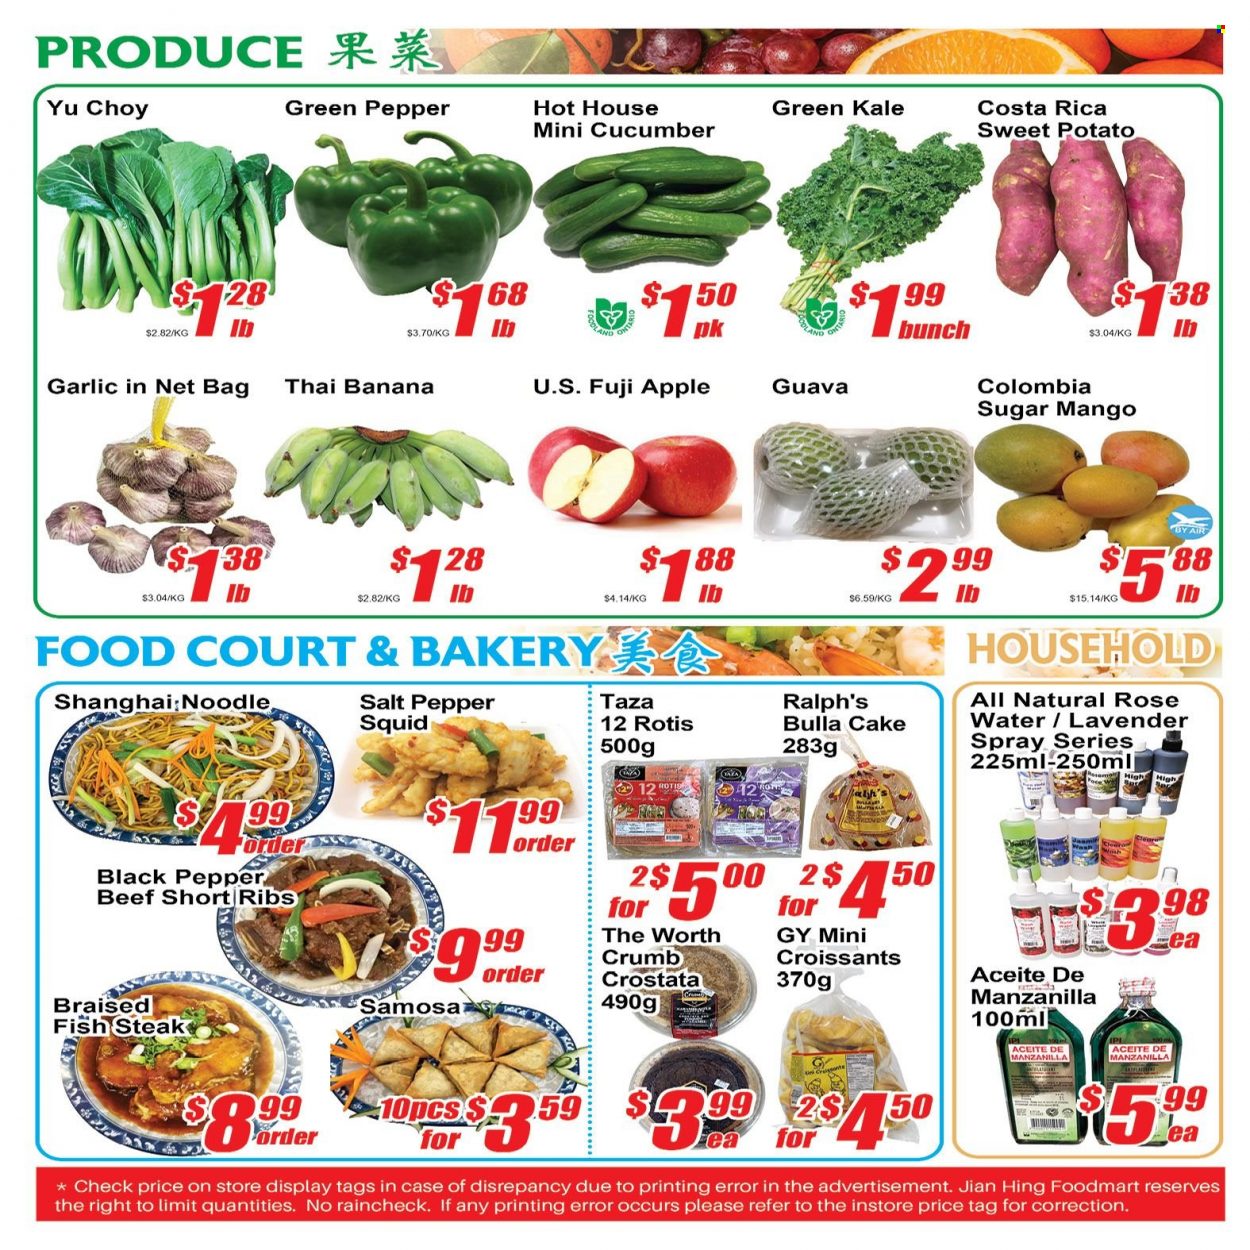 Jian Hing Supermarket flyer  - June 02, 2023 - June 08, 2023.